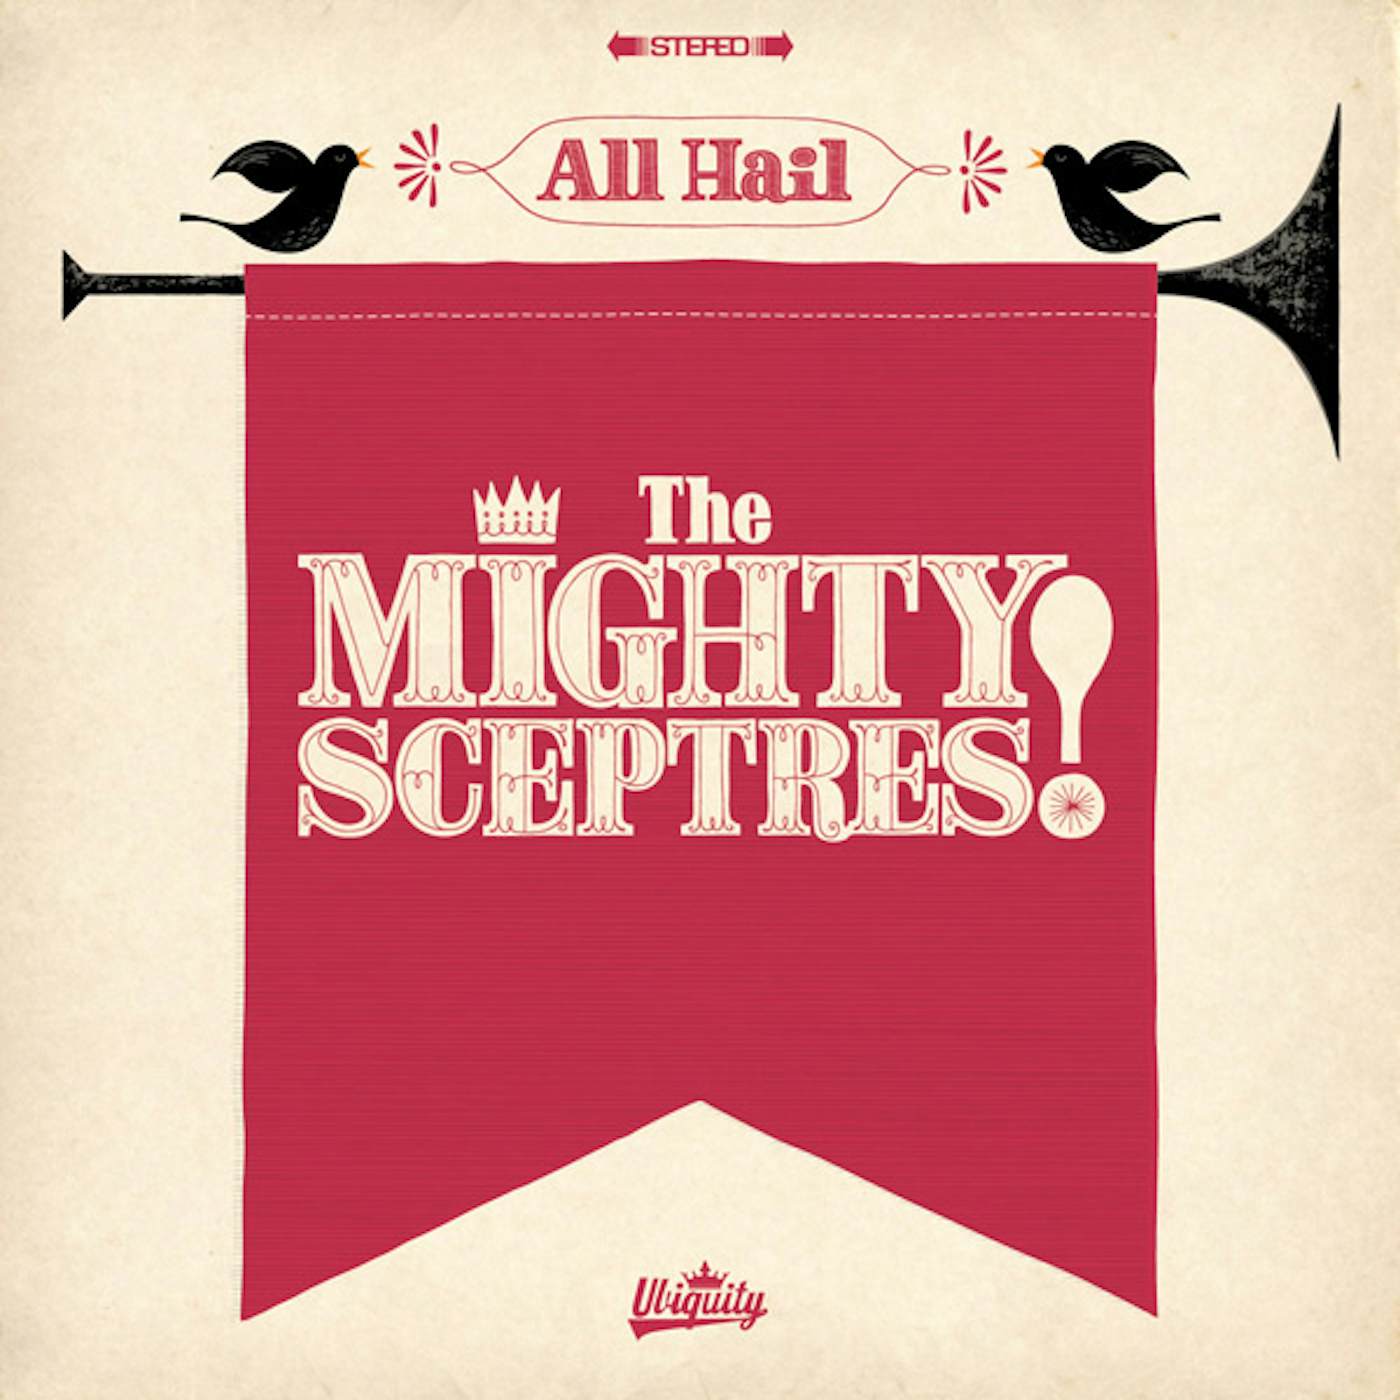 ALL HAIL THE MIGHTY SCEPTRES Vinyl Record